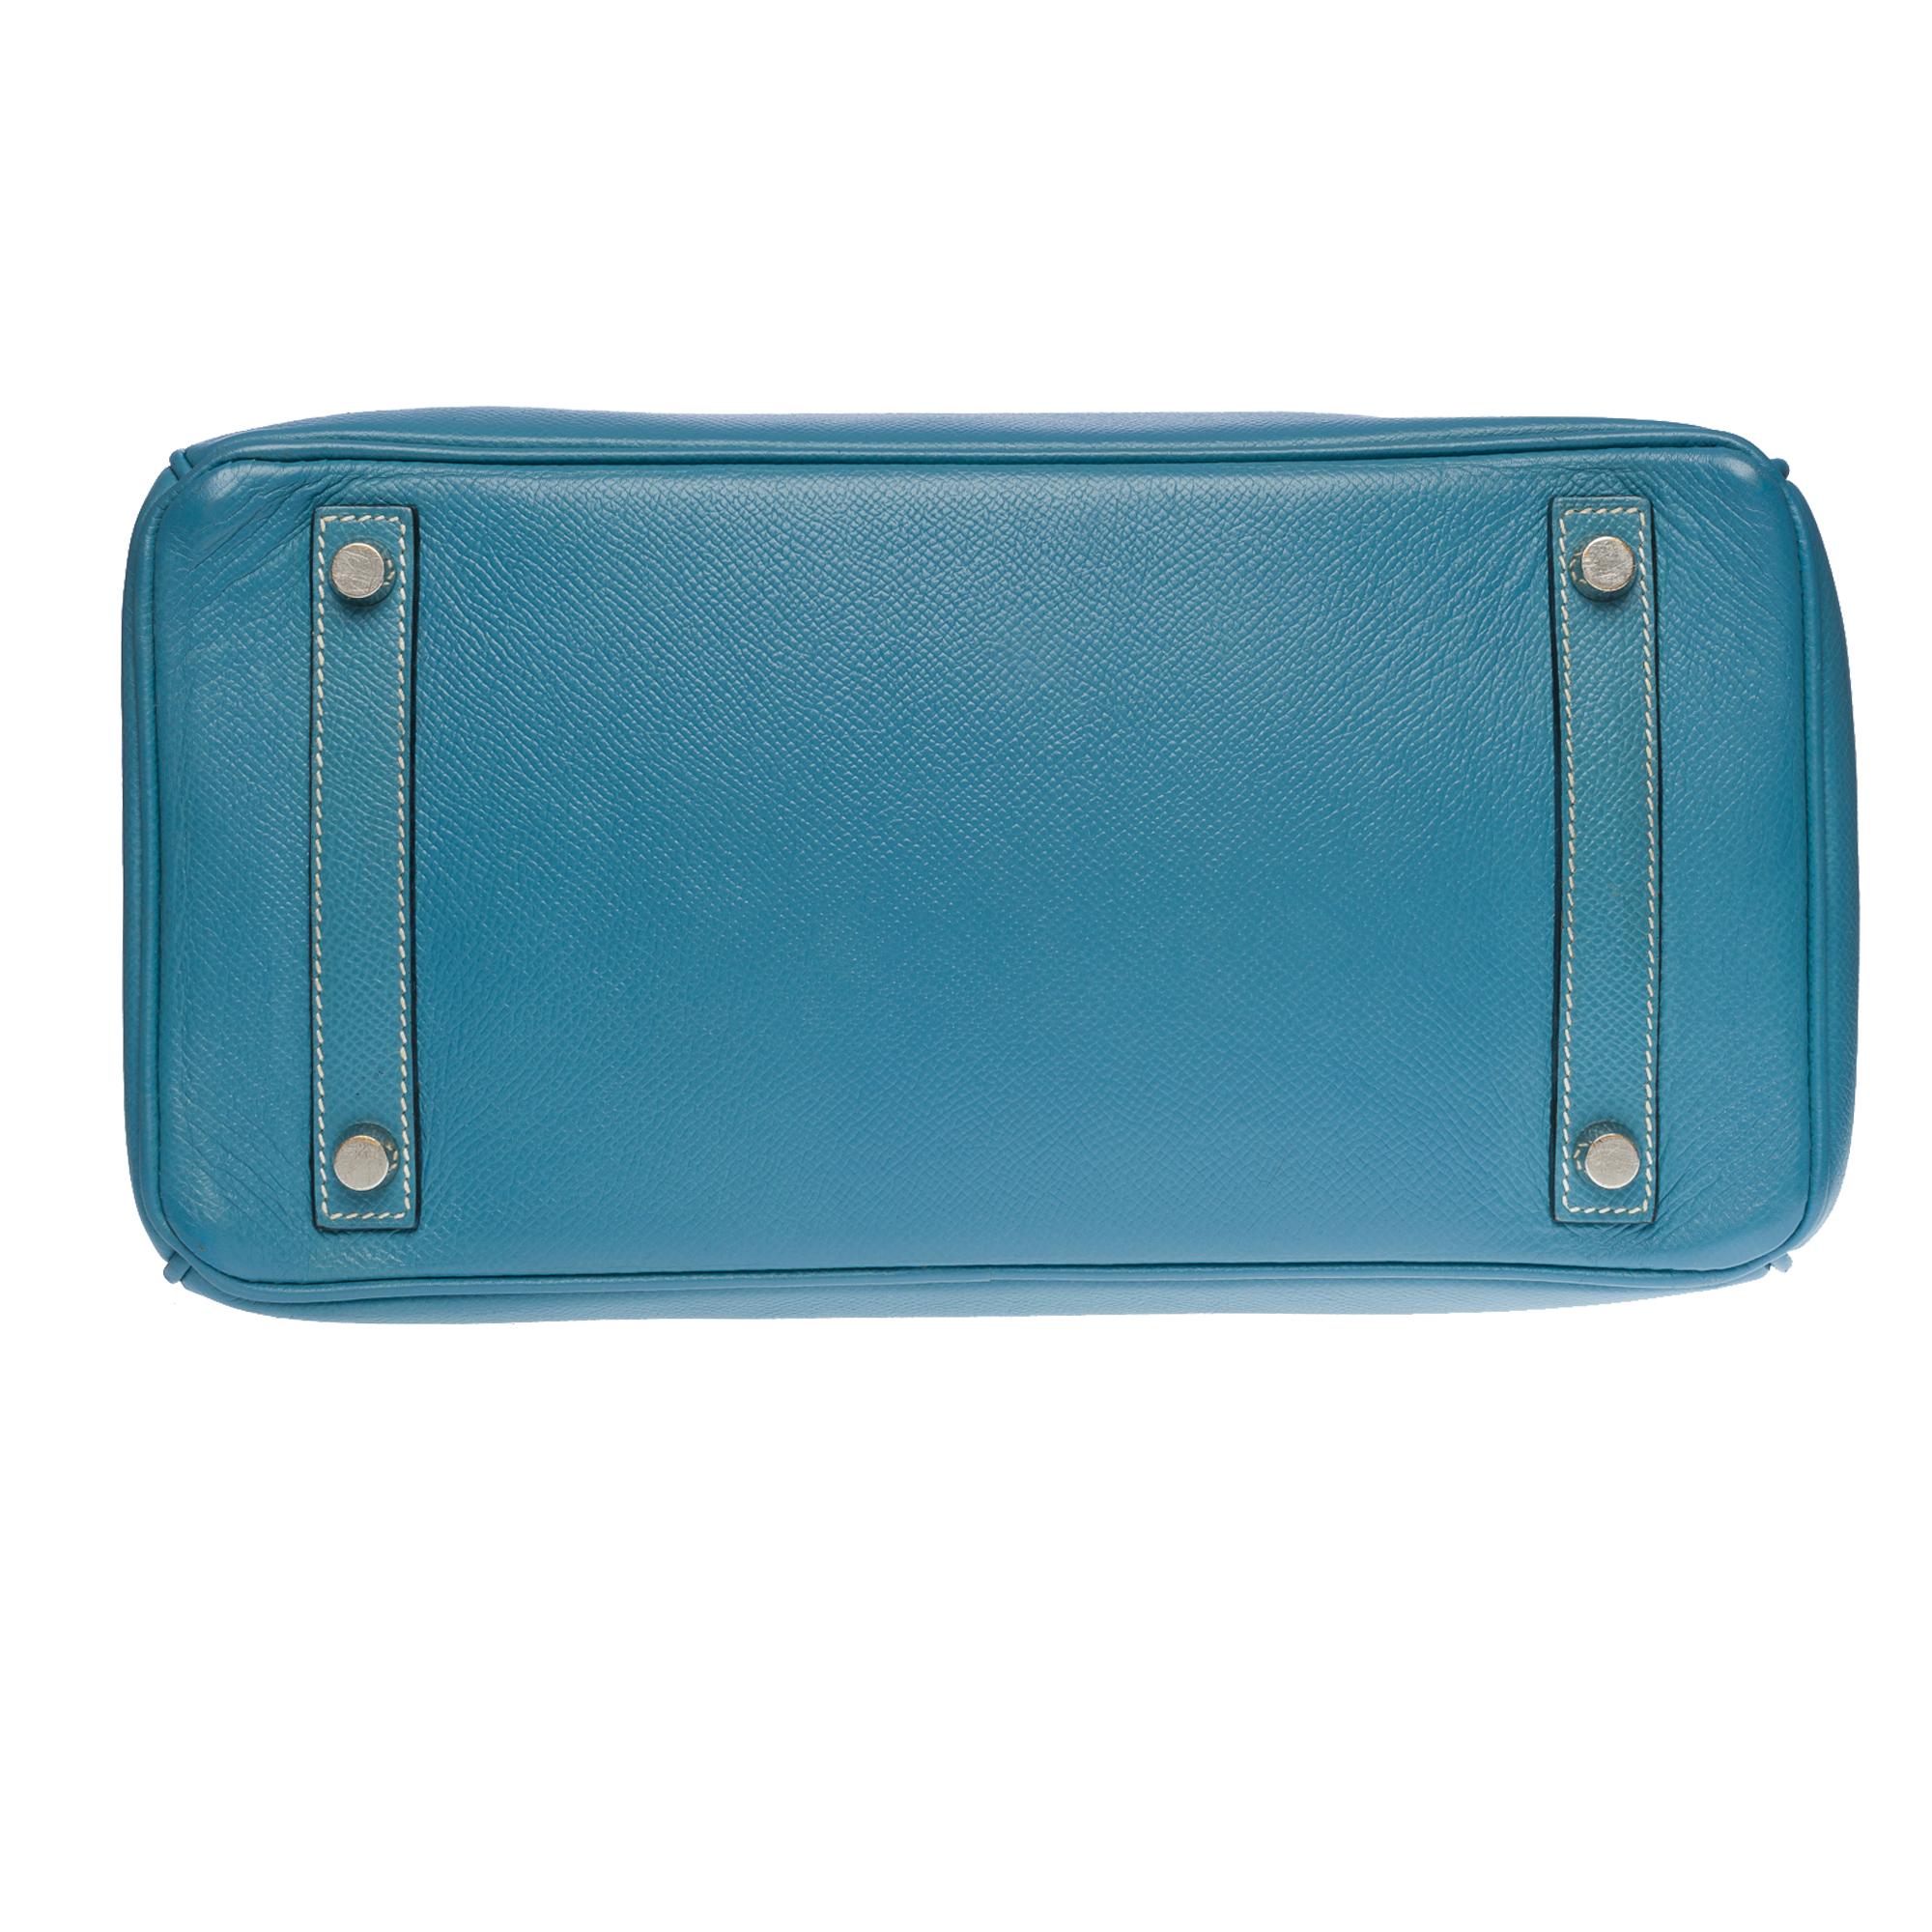 Stunning Hermès Birkin 30 handbag in Blue Jeans Epsom leather, SHW 5